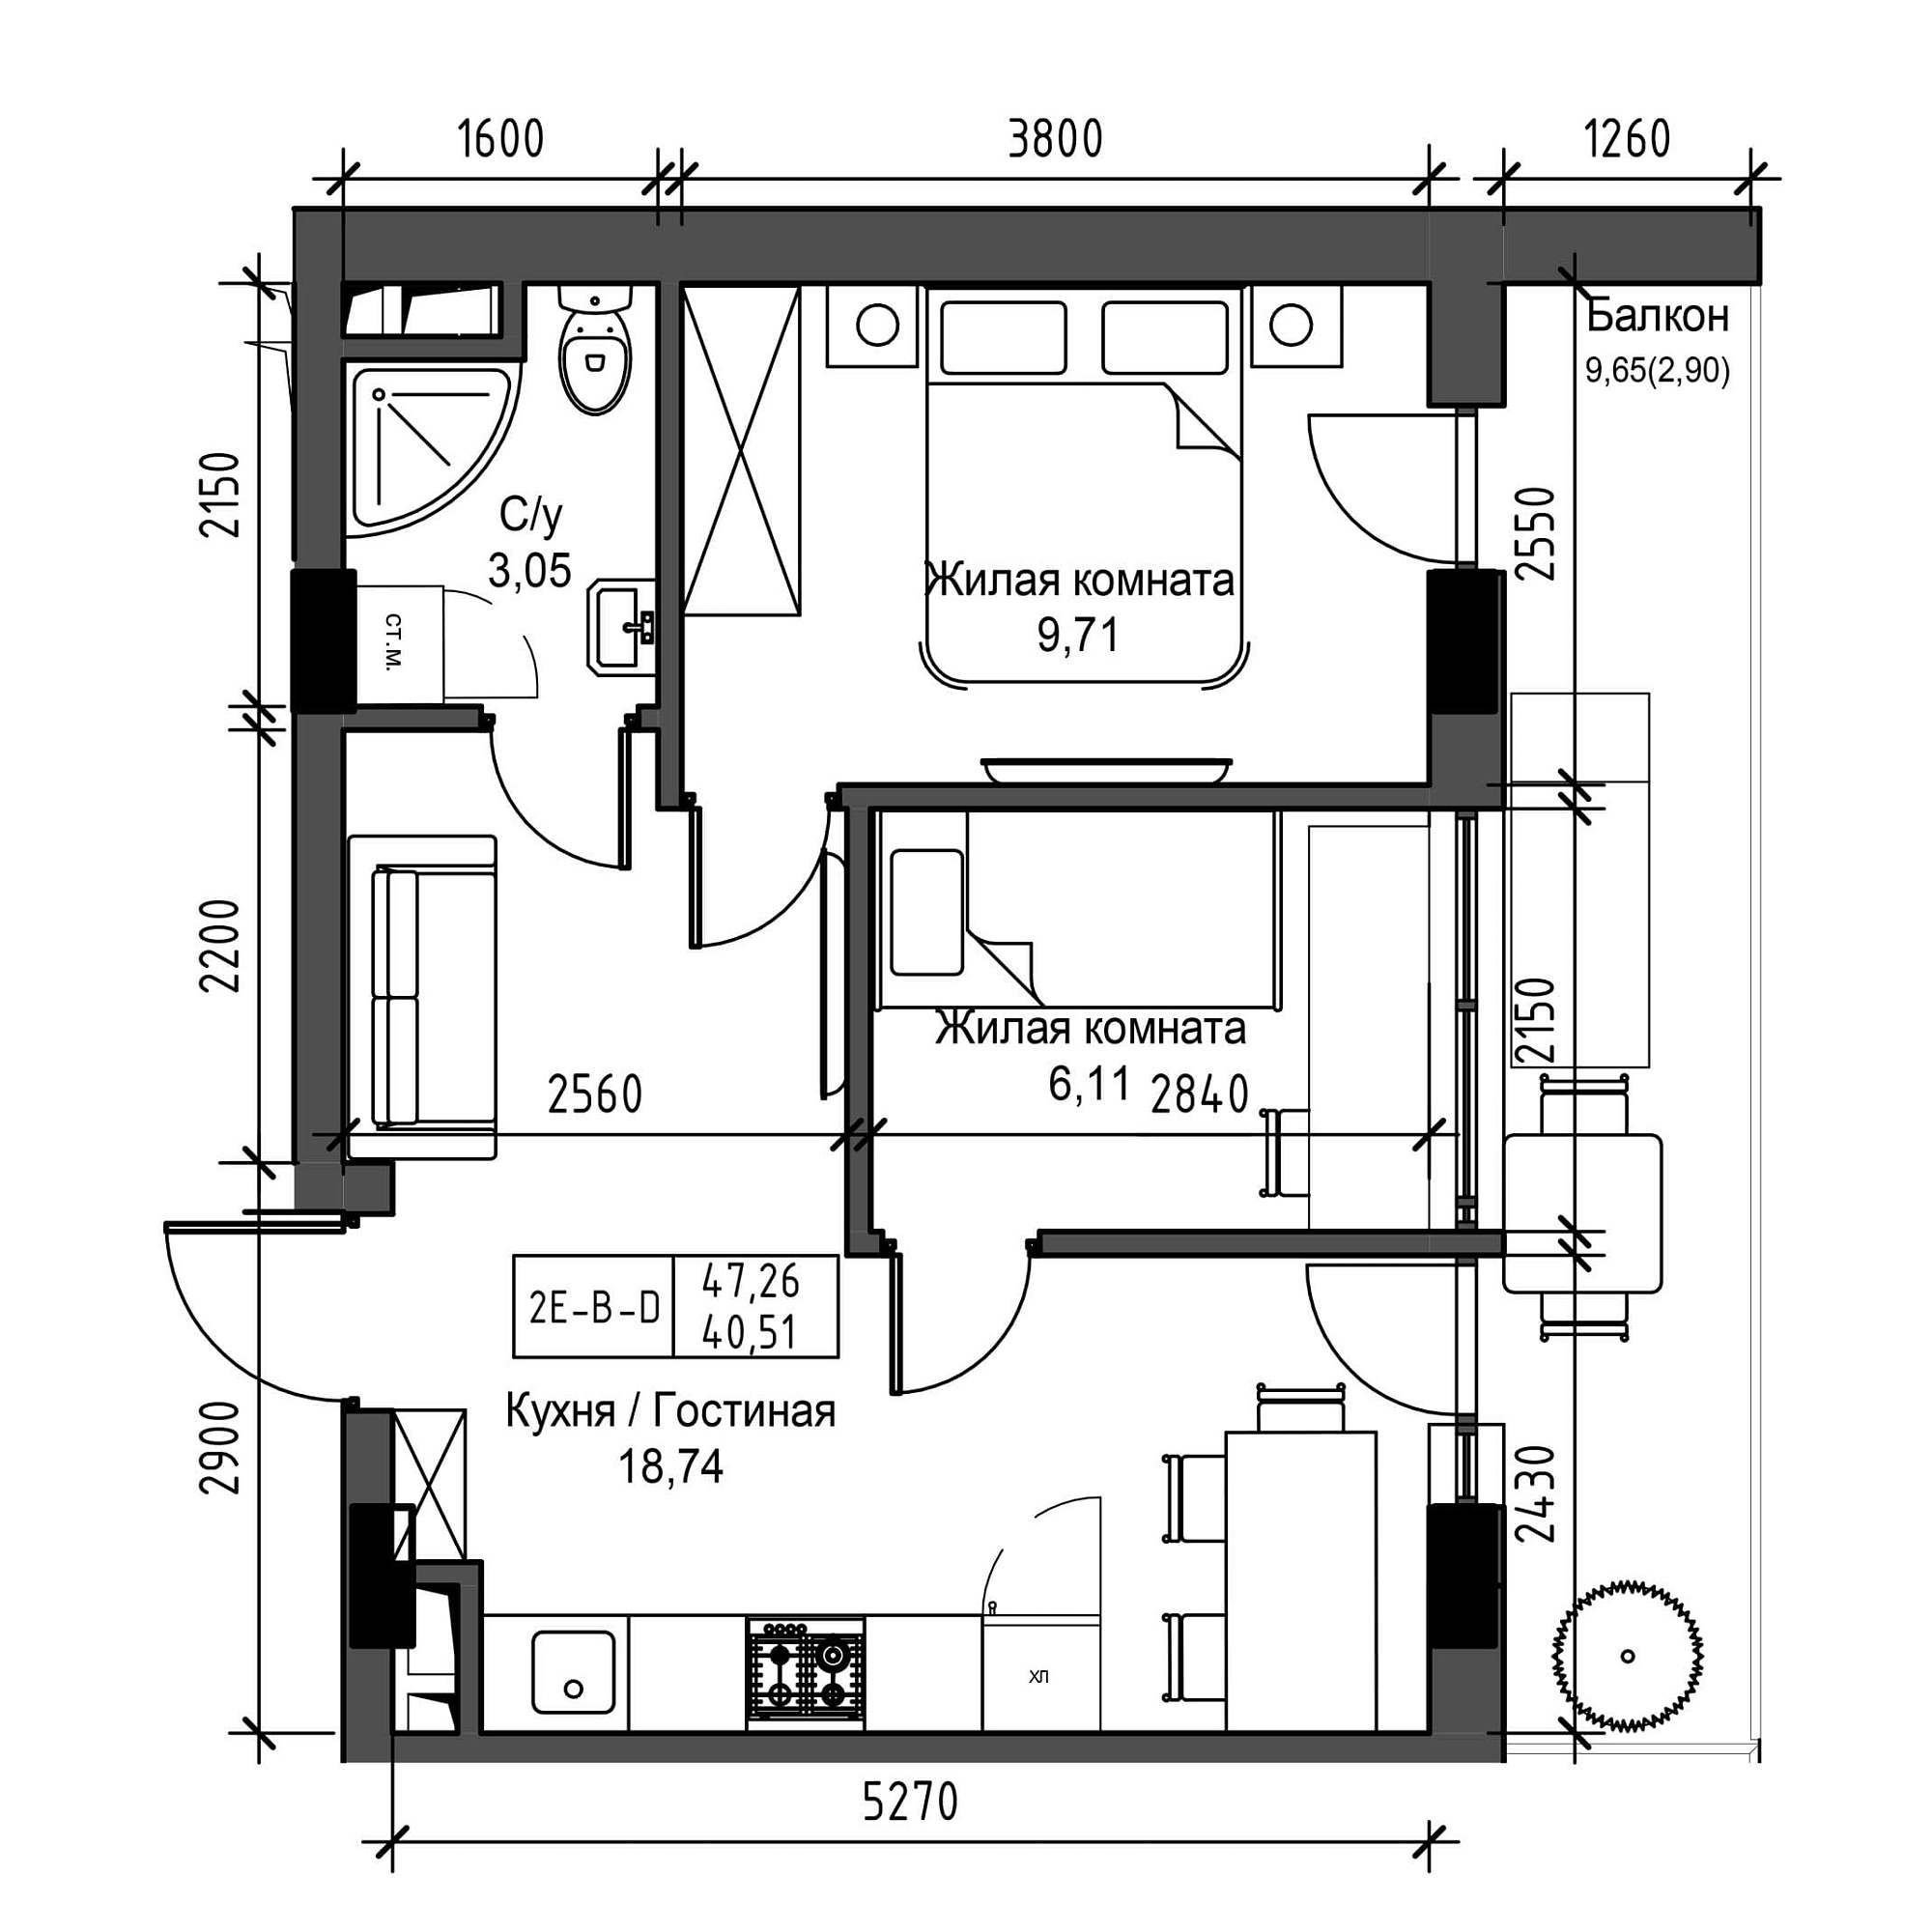 Planning 2-rm flats area 40.51m2, UM-001-05/0021.